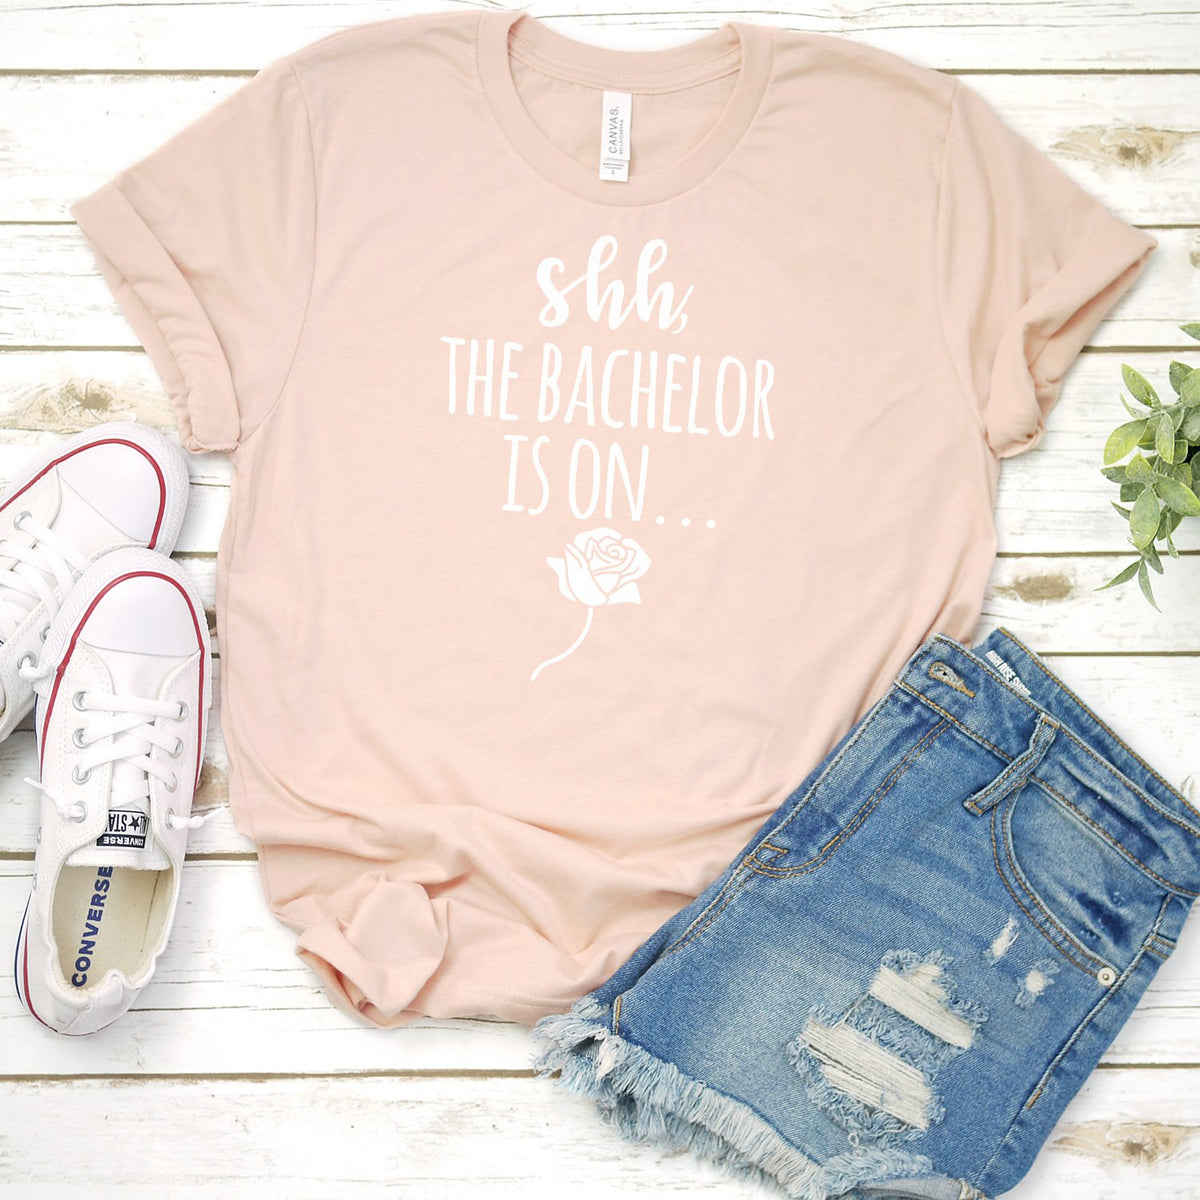 Shh The Bachelor is On - Short Sleeve Tee Shirt